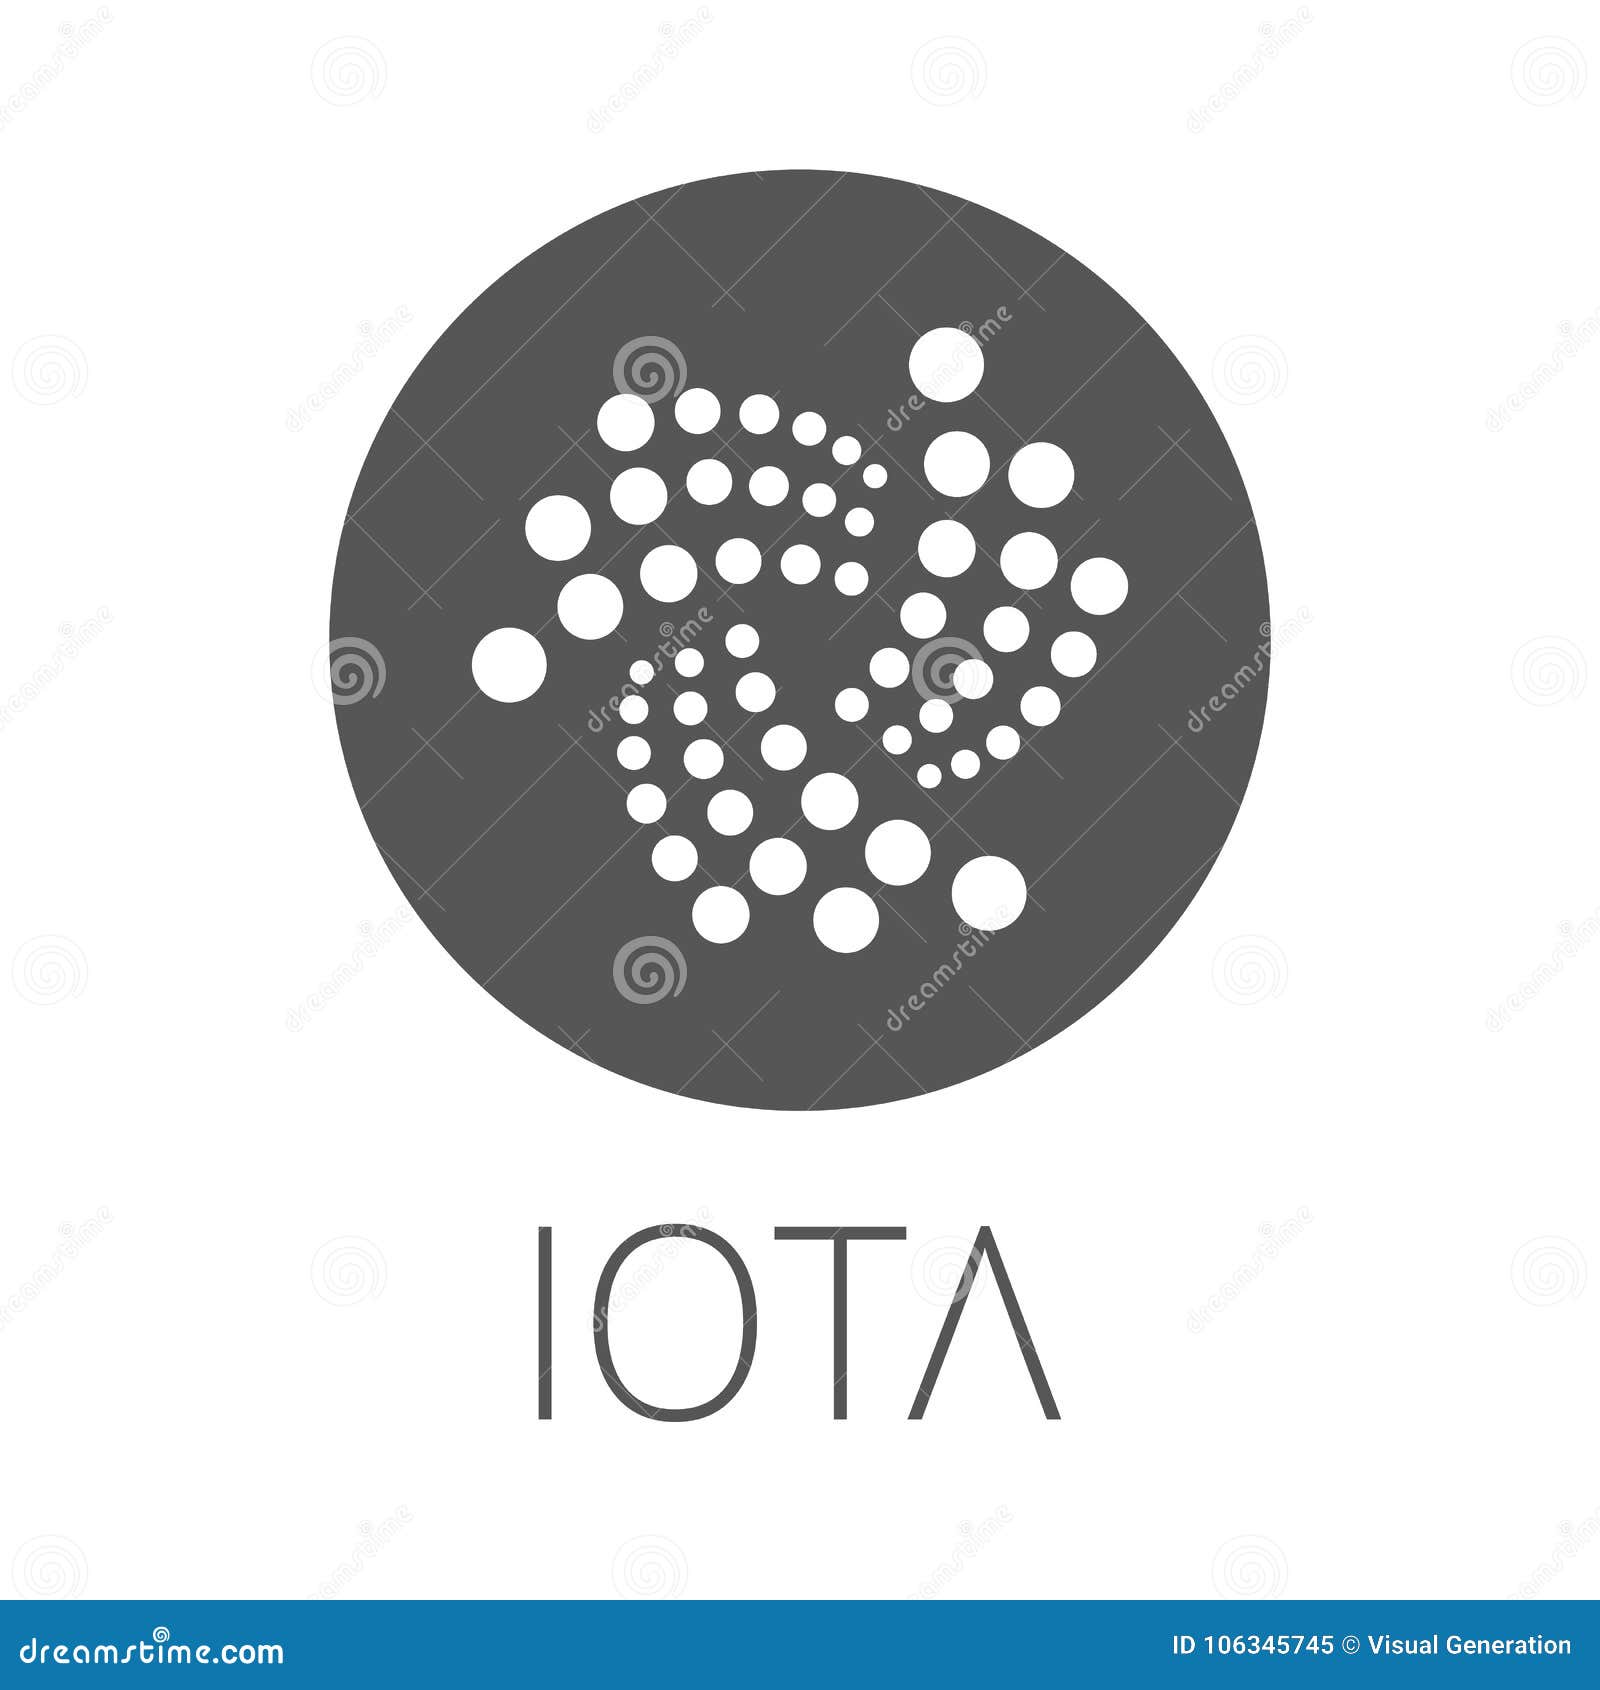 IOTA Price | IOTA Price Index and Live Chart - CoinDesk